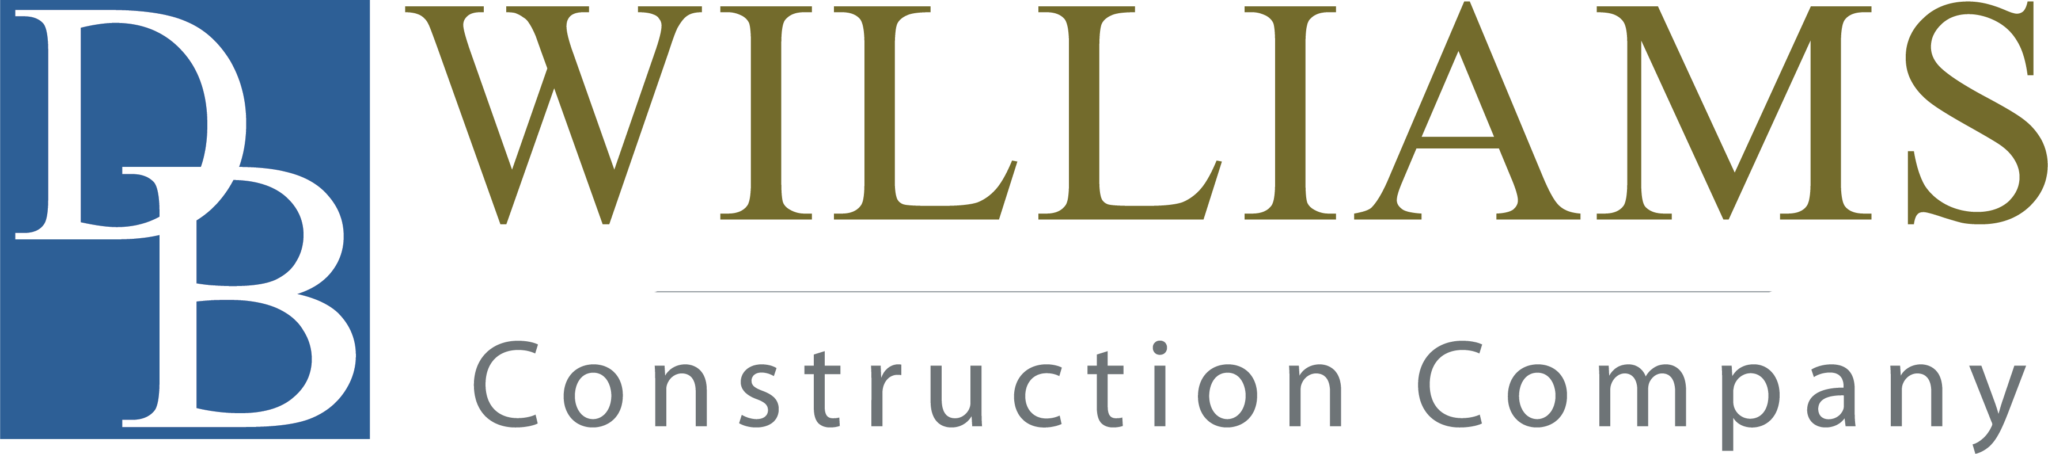 D.B. Williams Construction